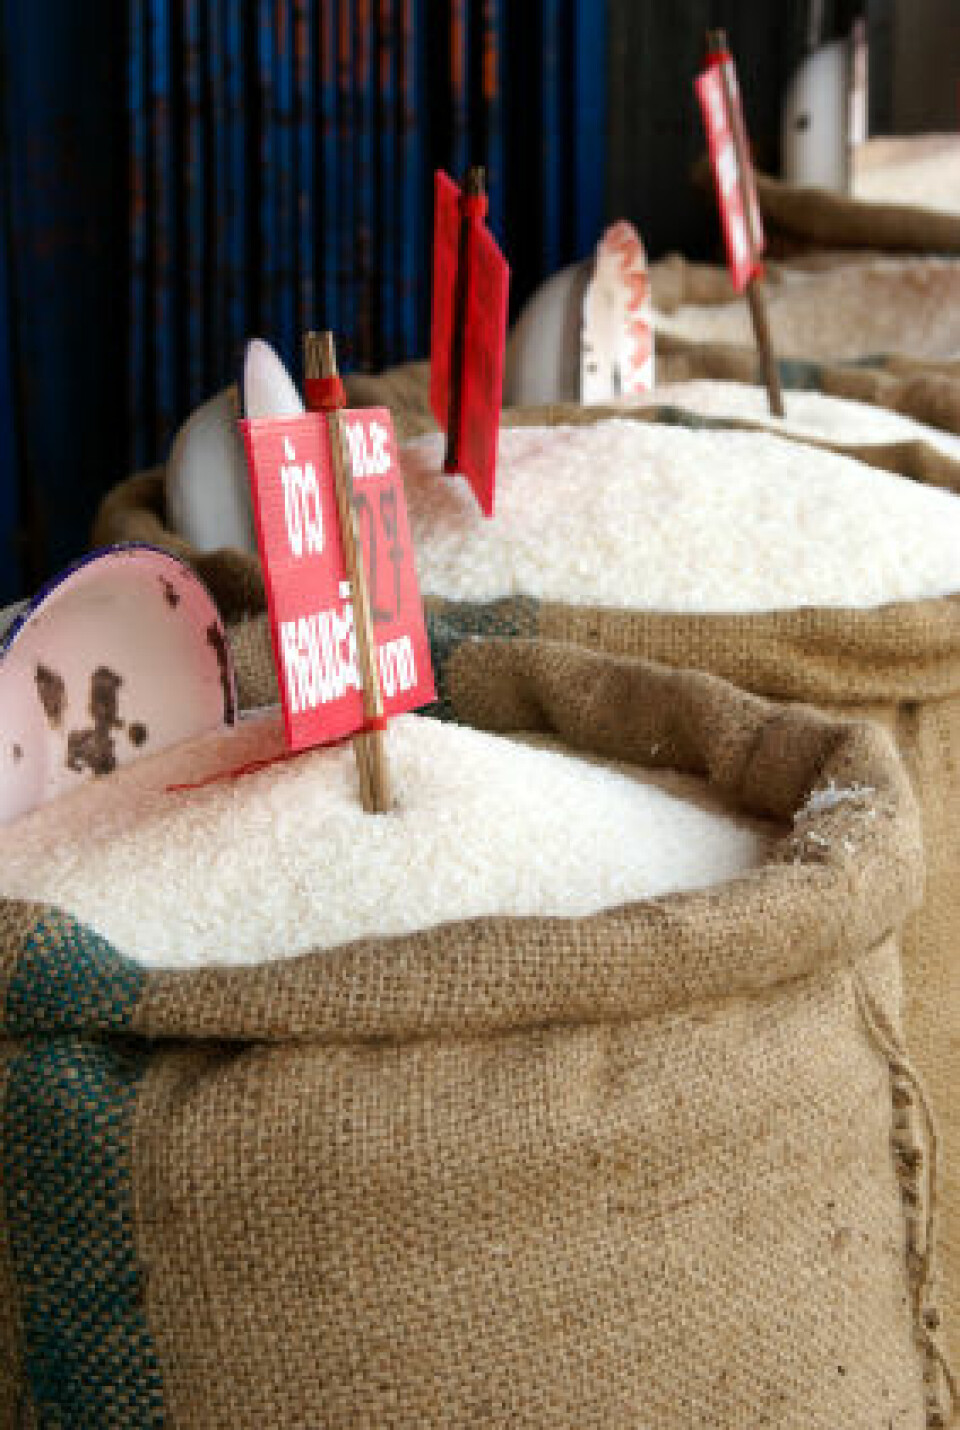 Salg av ris i Thailand. (Foto: iStockphoto)